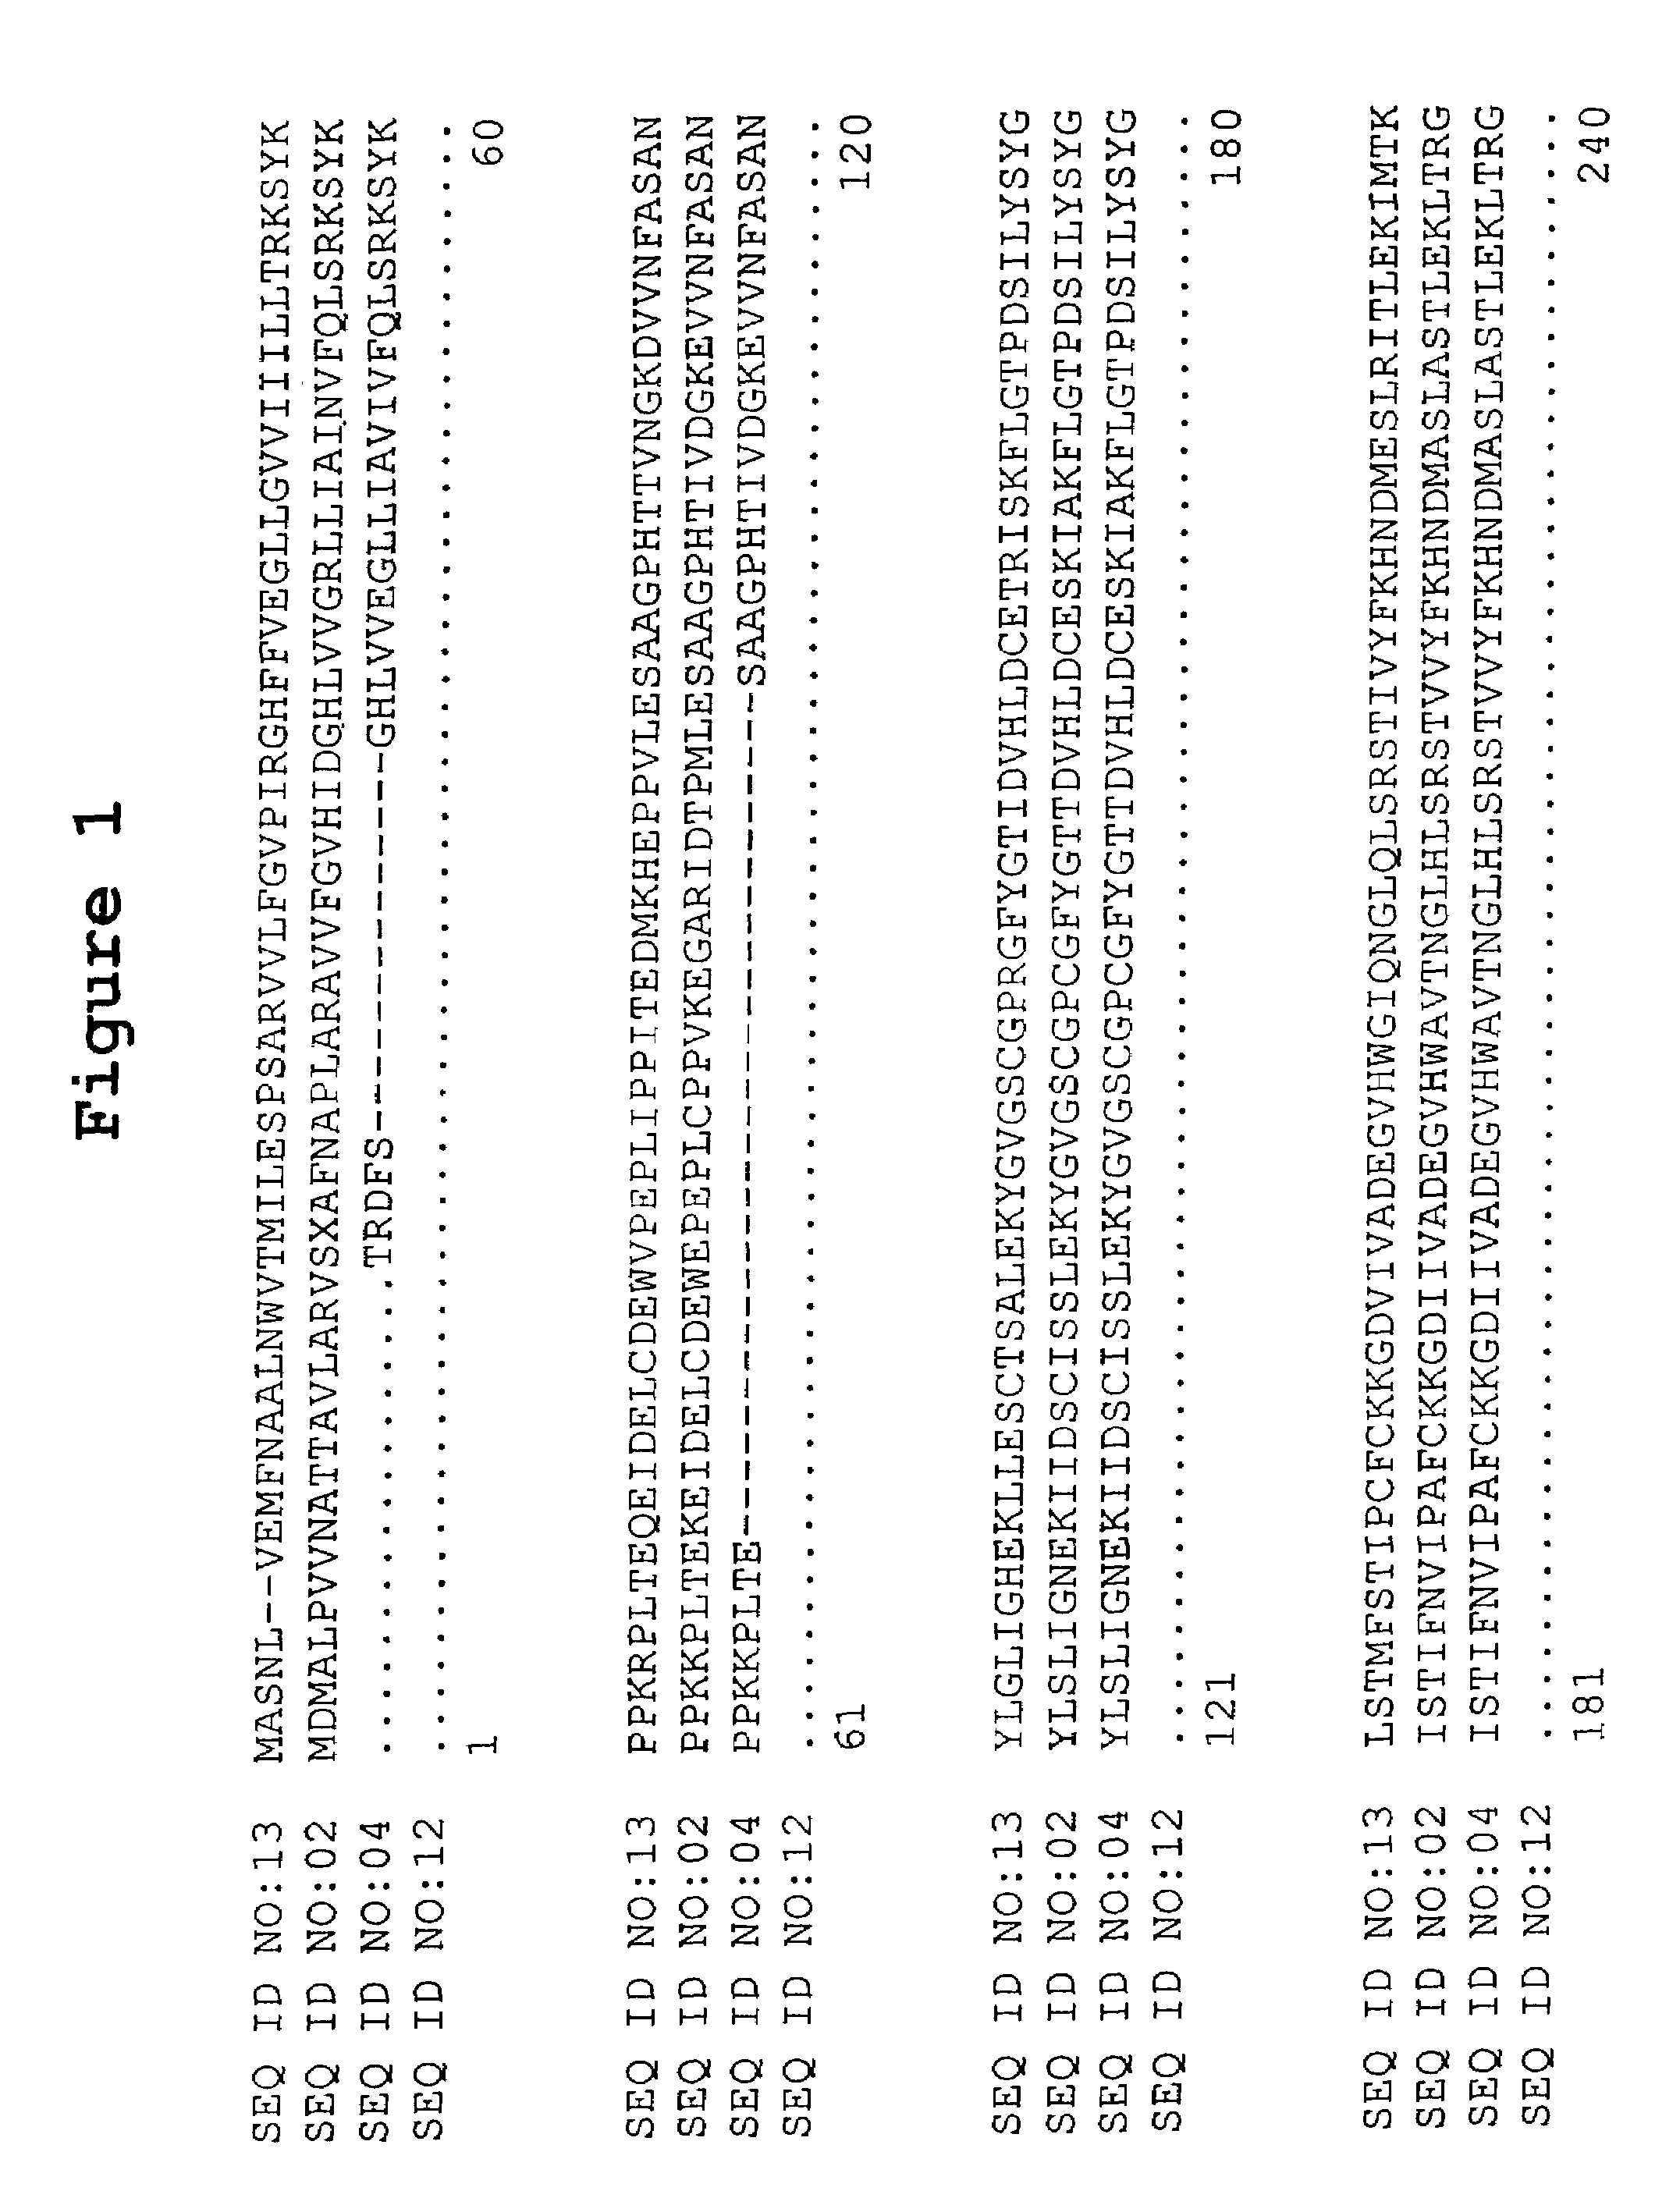 Lcb1 subunit of serine palmitoyltransferase